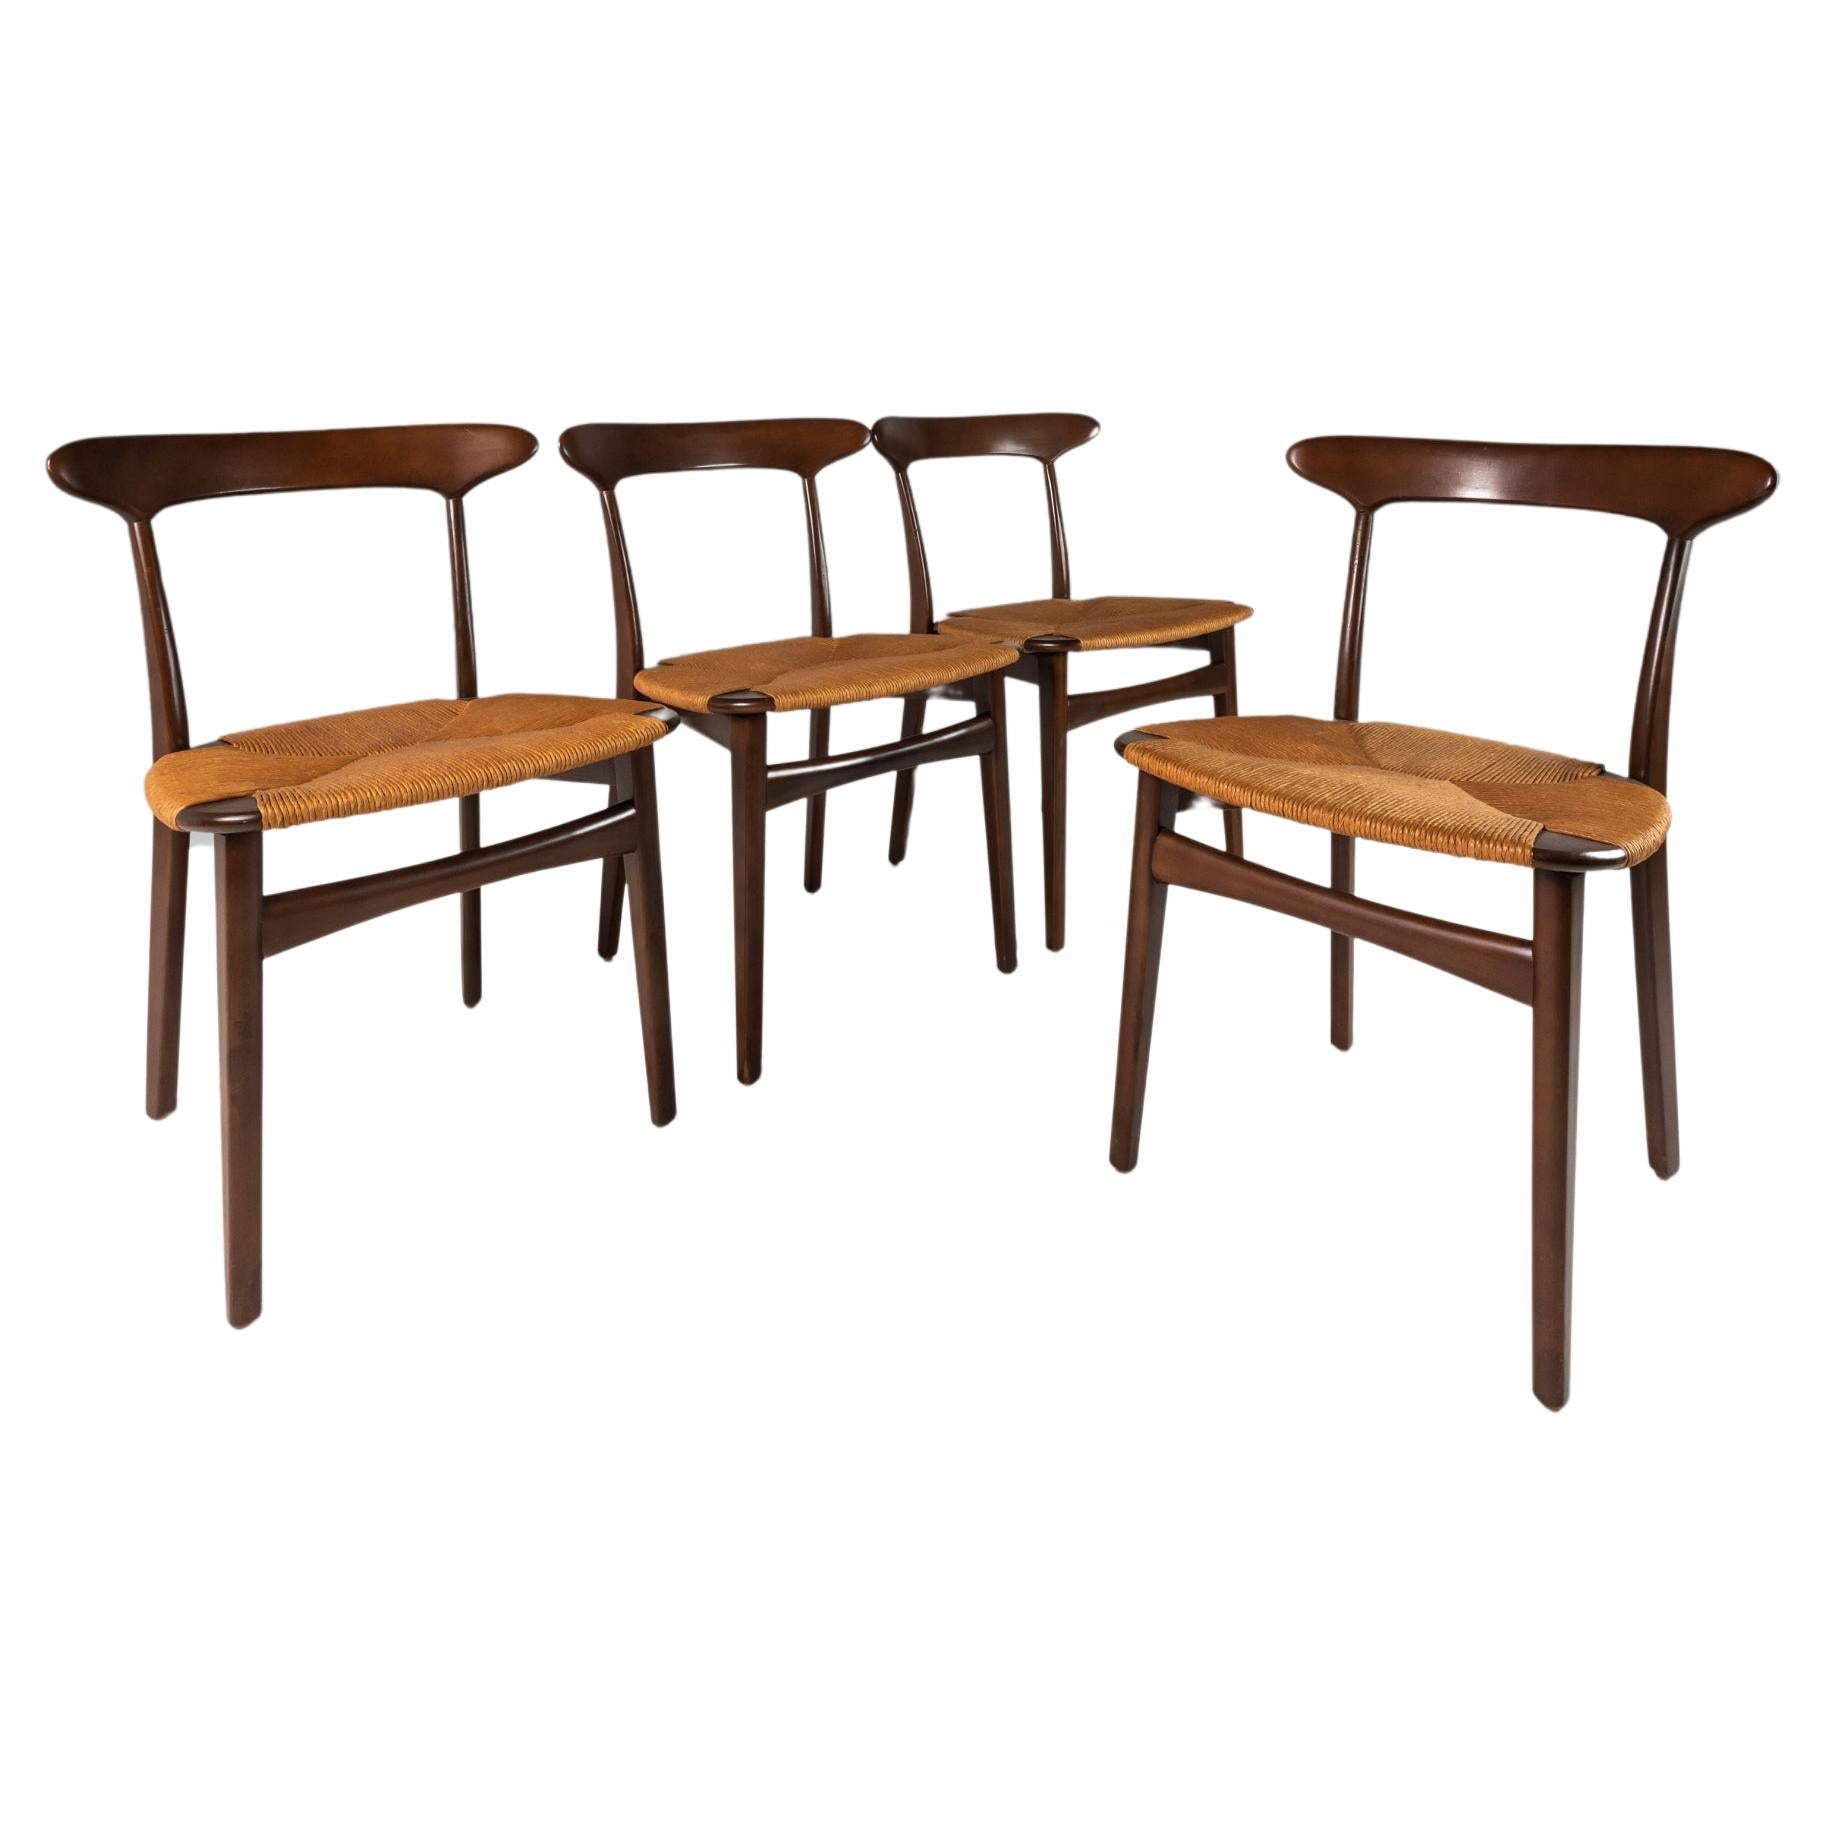 Set of Four (4) Danish Modern Thrush Dining Chairs After Hans J. Wegner, c. 1960